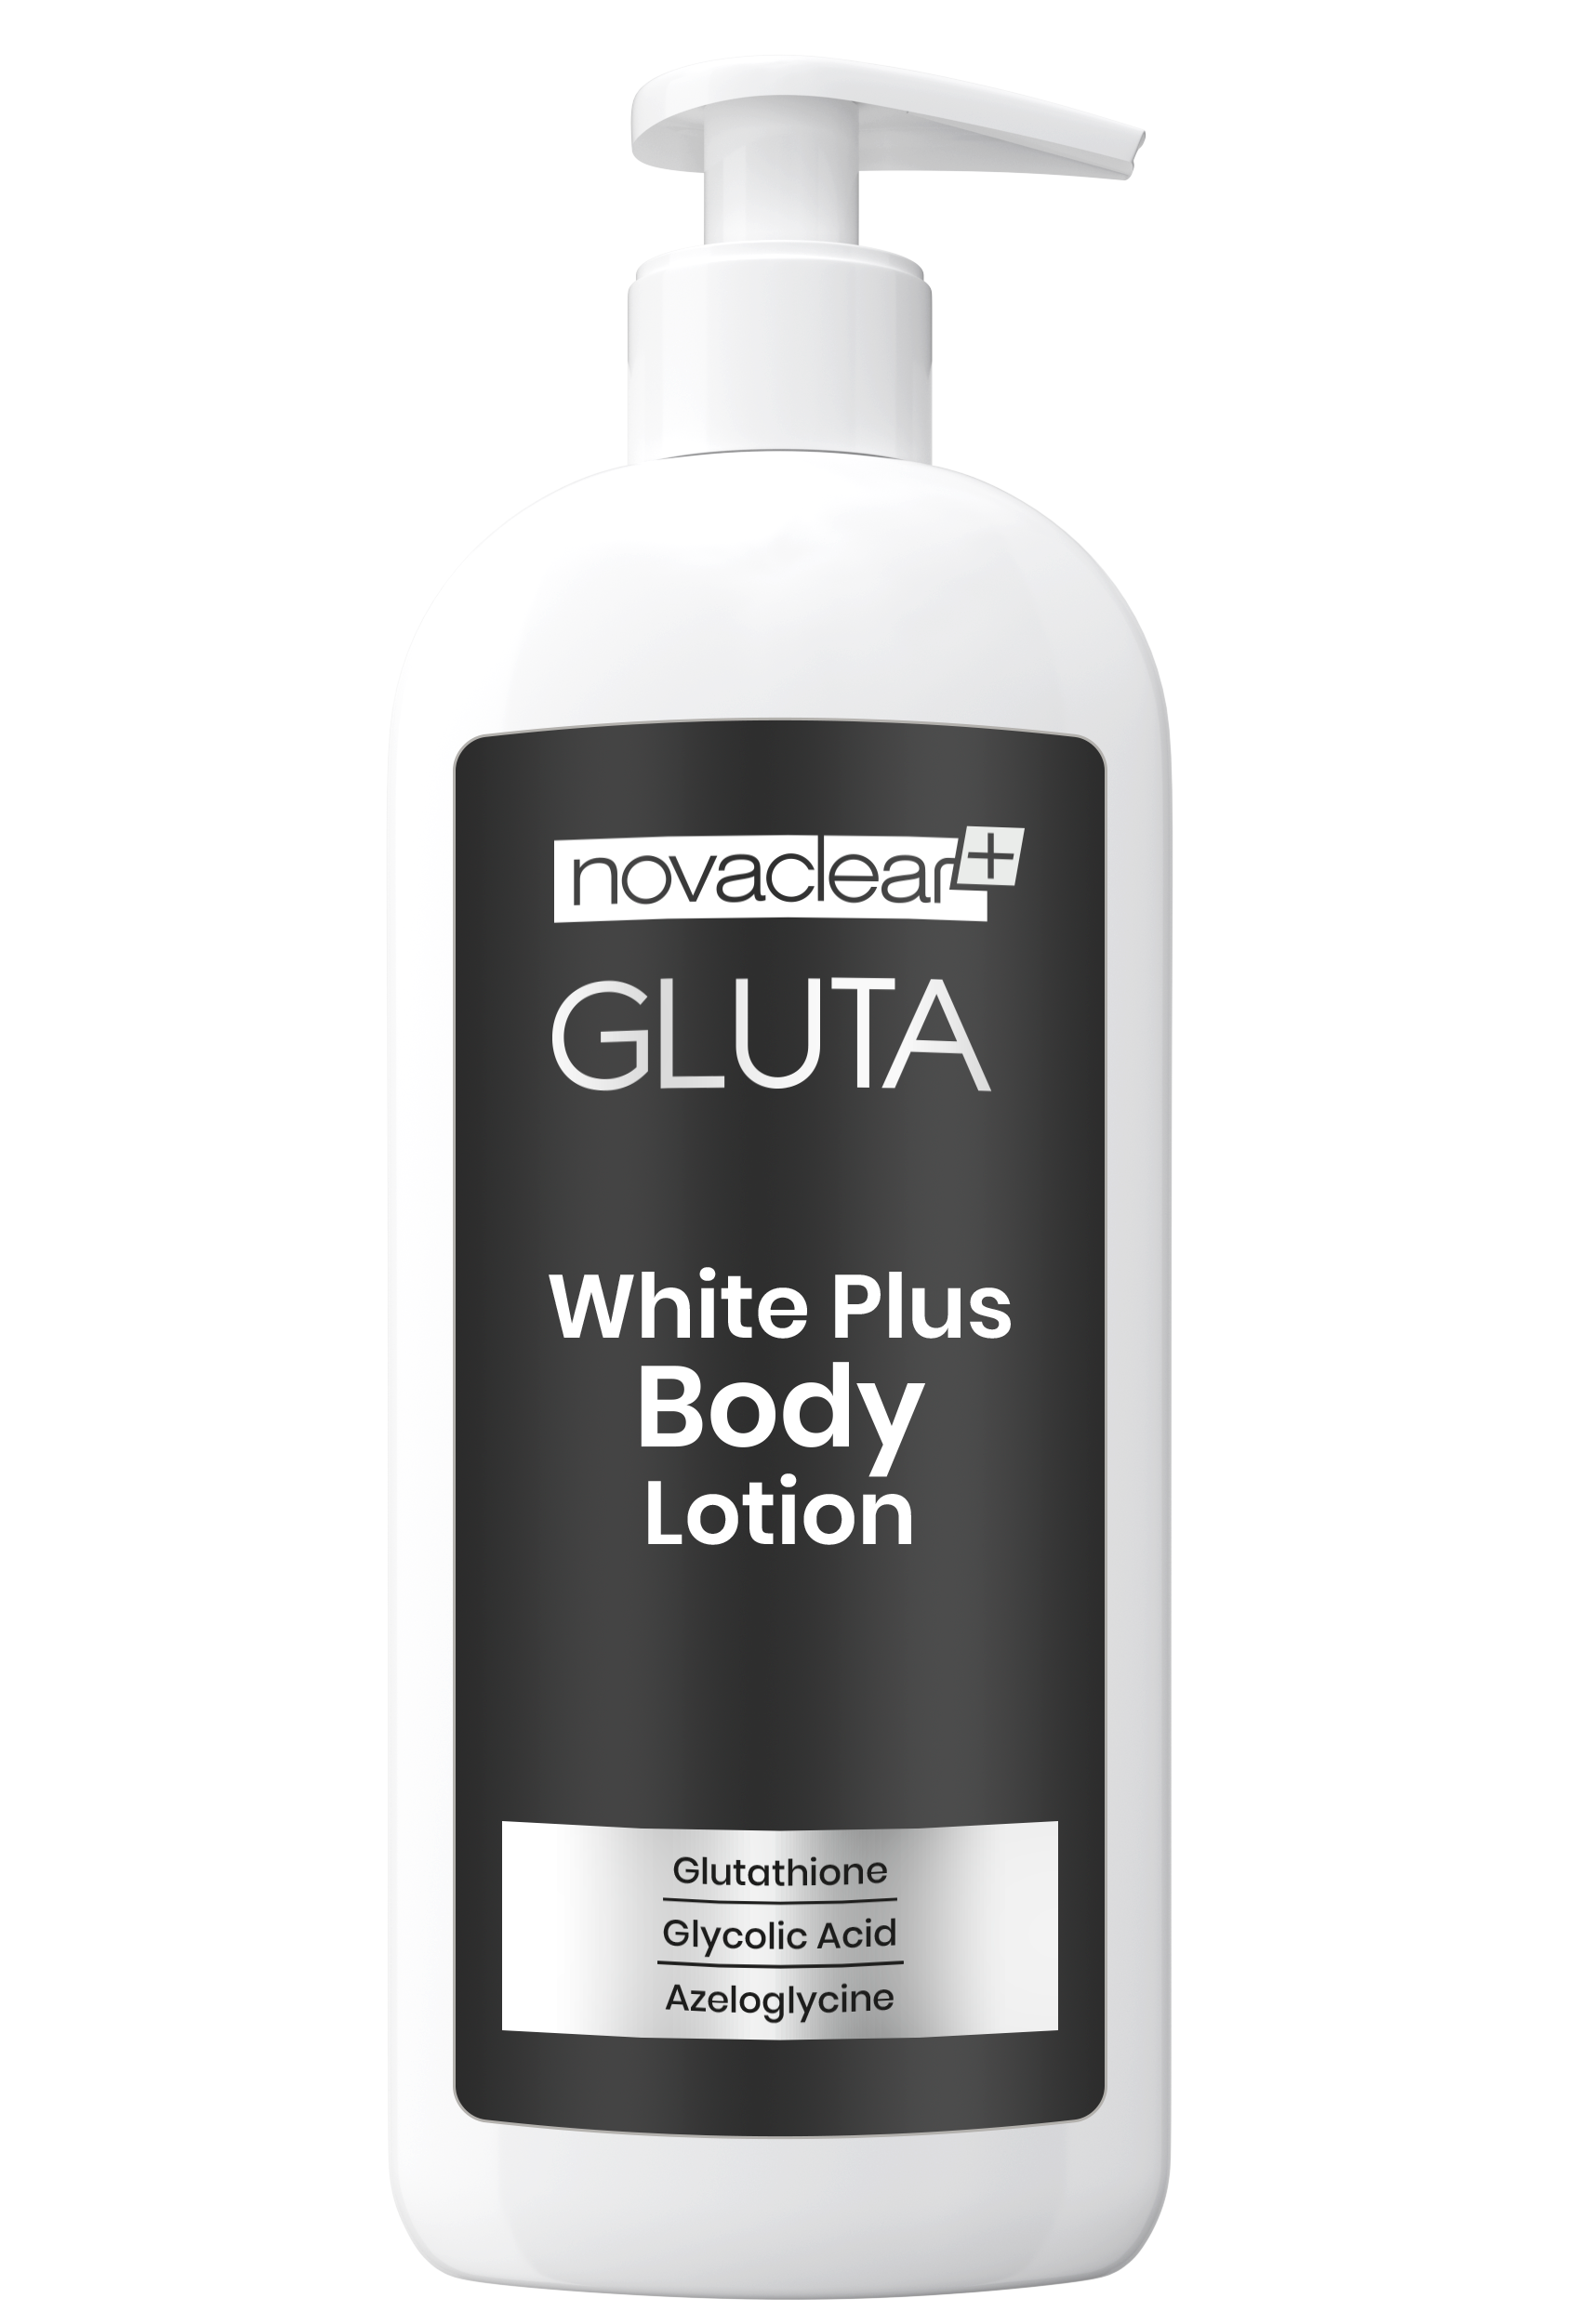 Novaclear Gluta White Plus Body Lotion